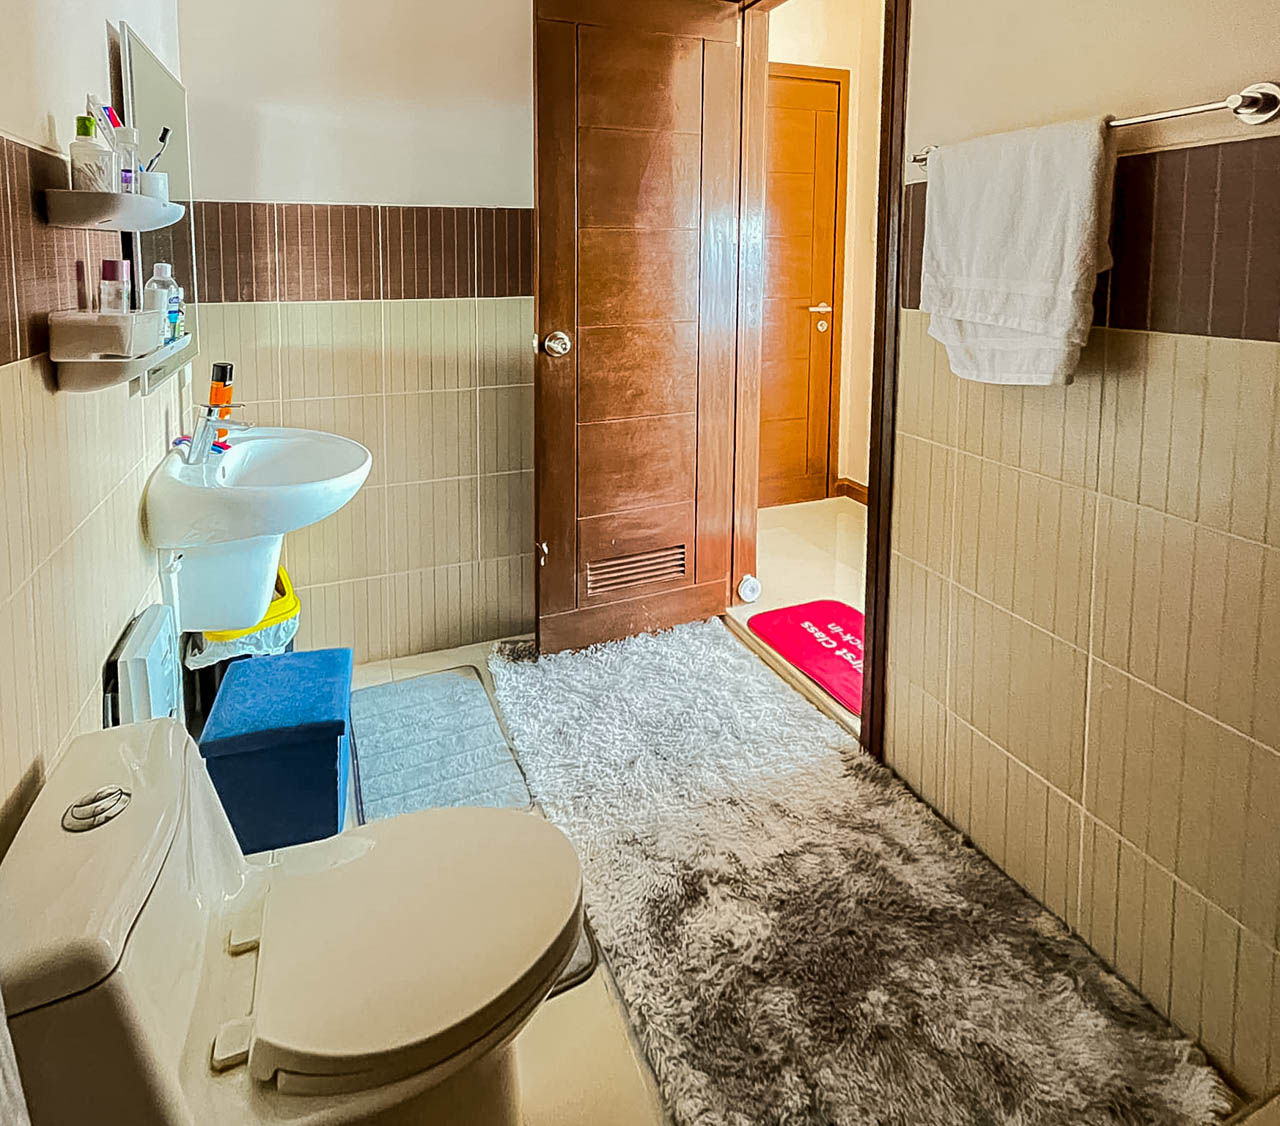 RCARM1 Furnished 2 Bedroom Condo for Rent in Mactan Lapu-Lapu - 10